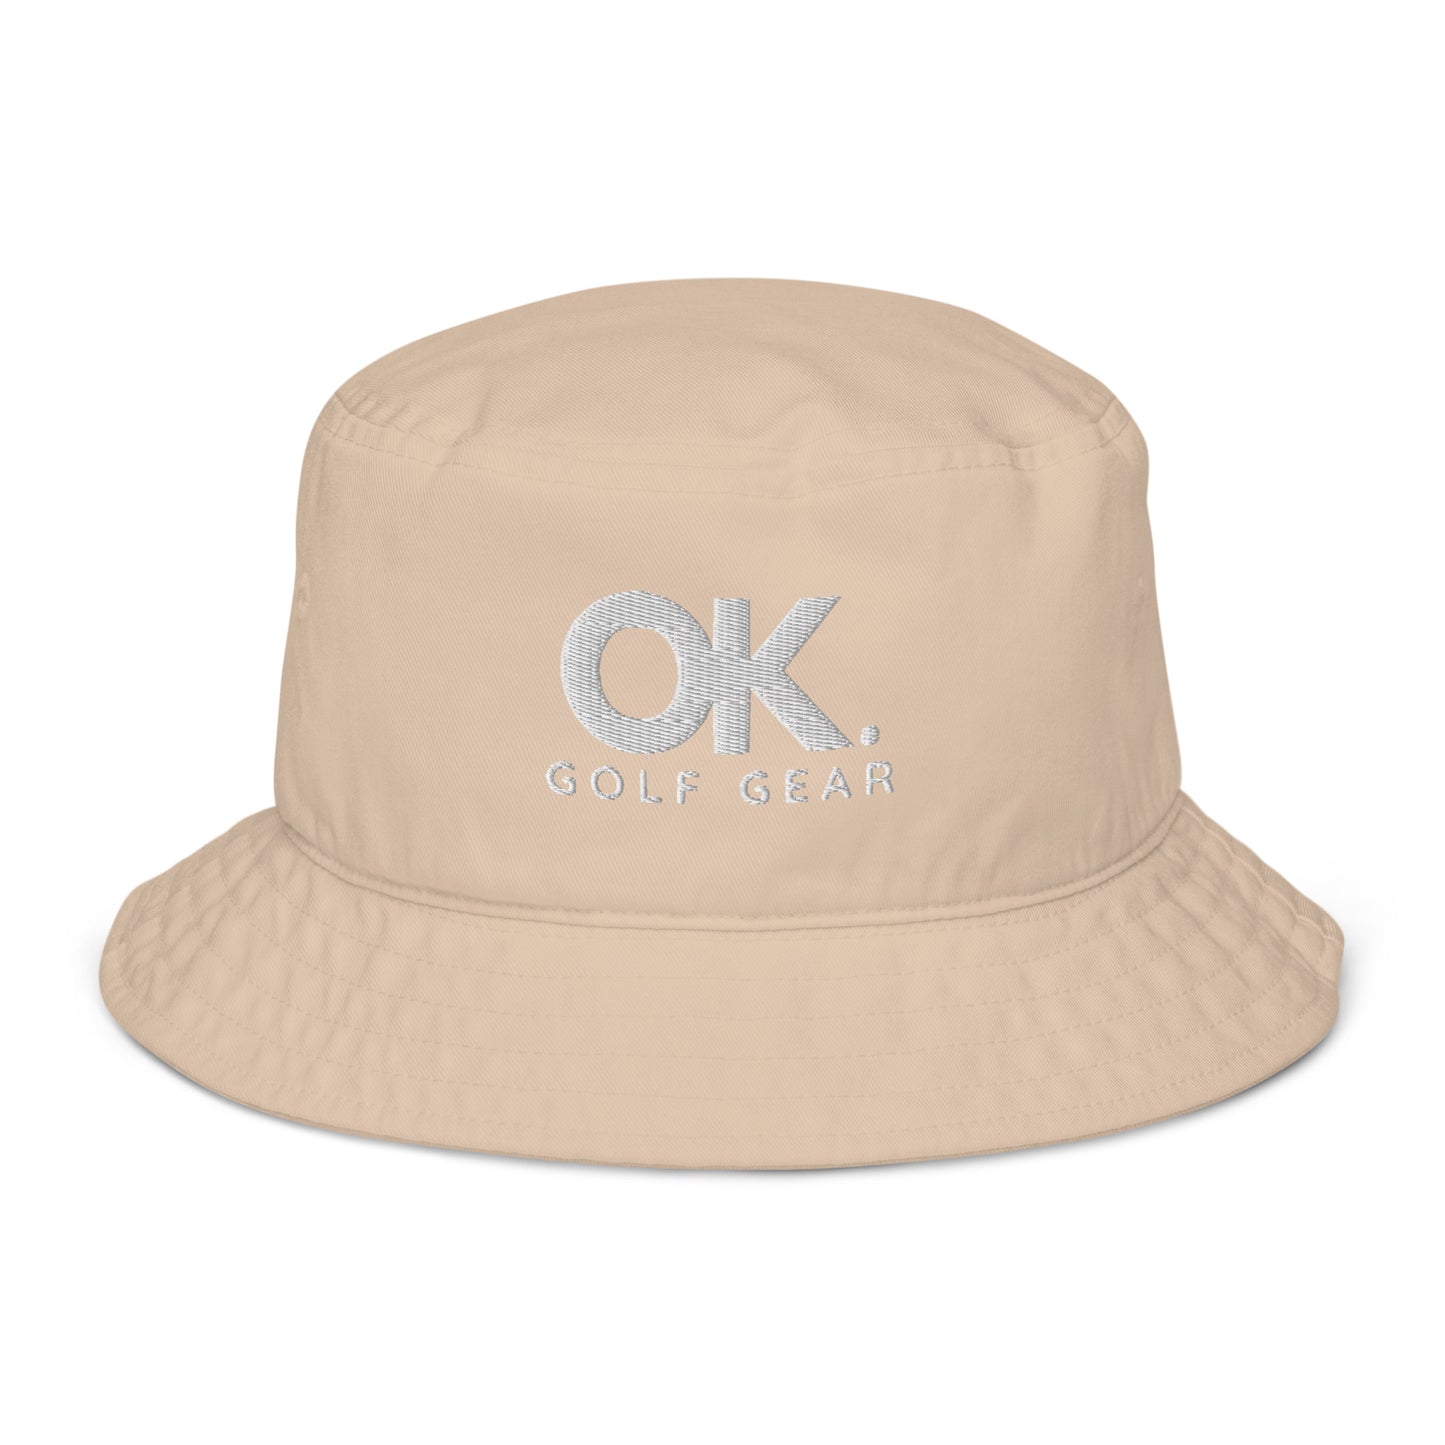 Ok Golf Gear in White Bucket Hat